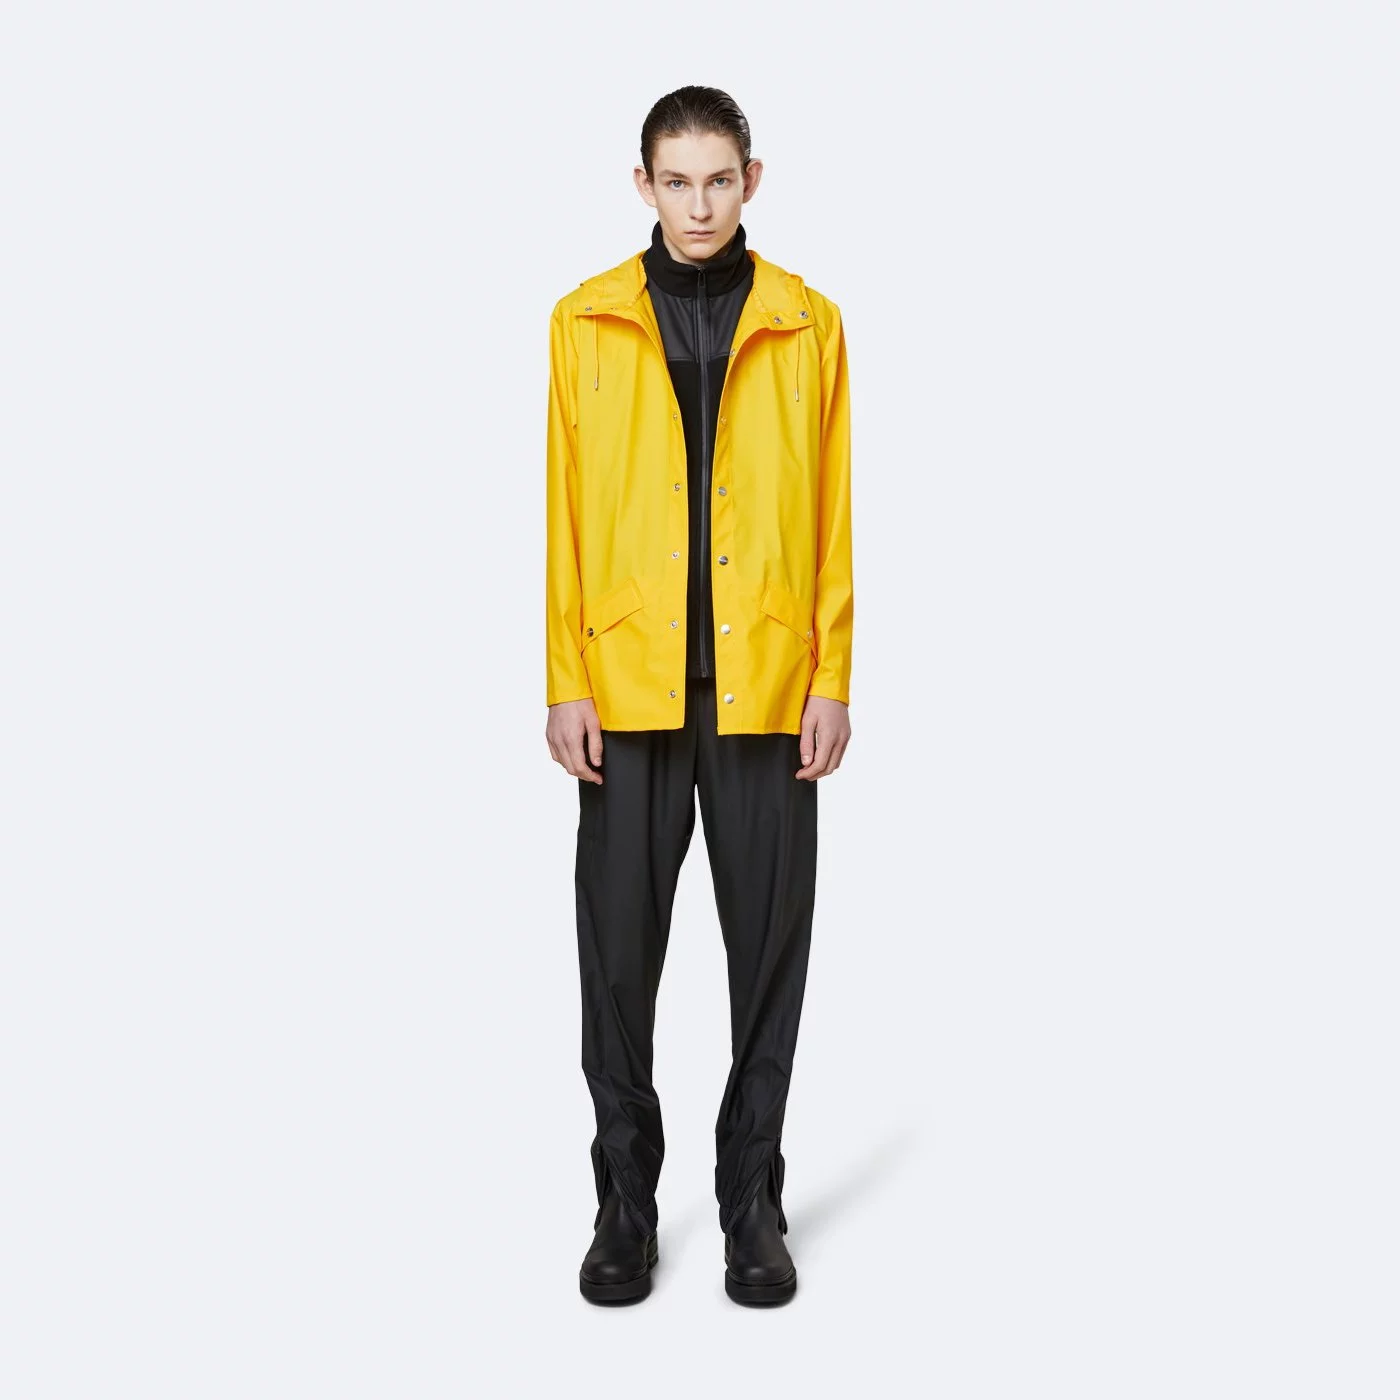 Pršiplášť Rains Jacket Yellow 1201-1 (M/L) (Yellow)